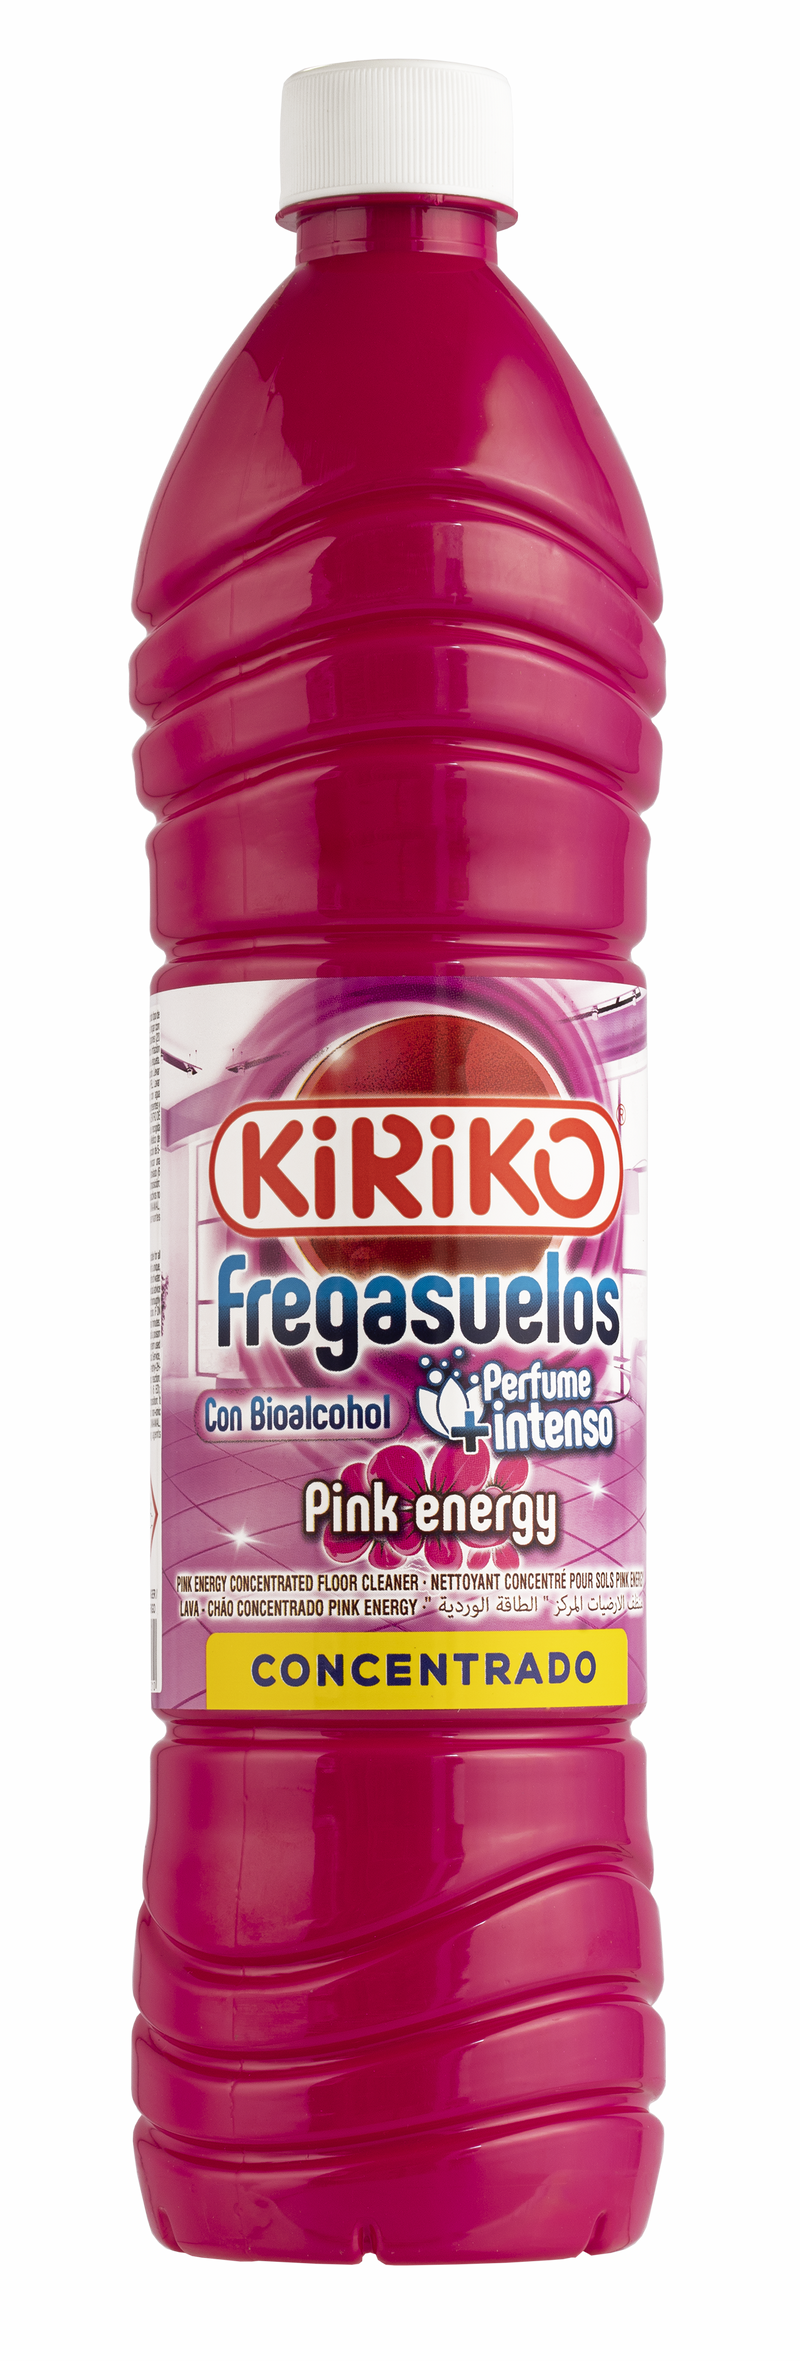 Kiriko Pink energy Concentrated floor cleaner 1L